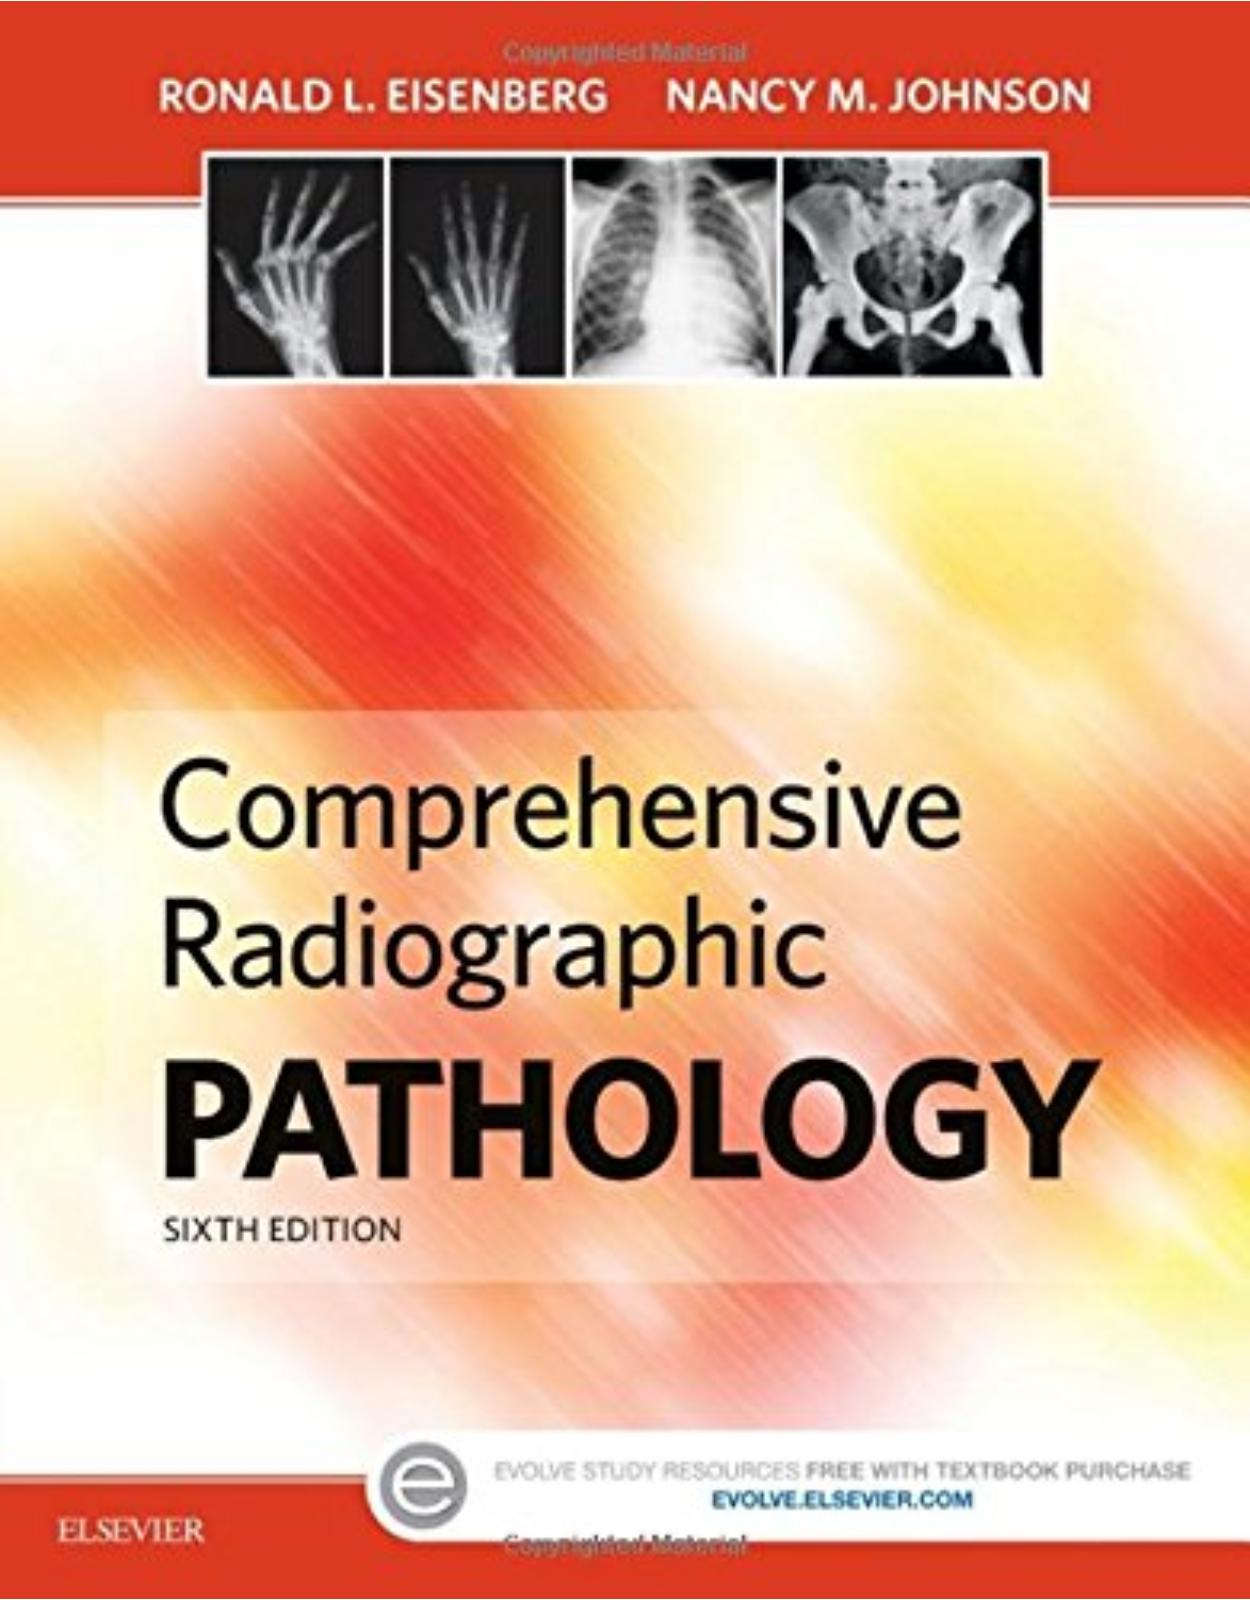 Comprehensive Rediographic Pathology